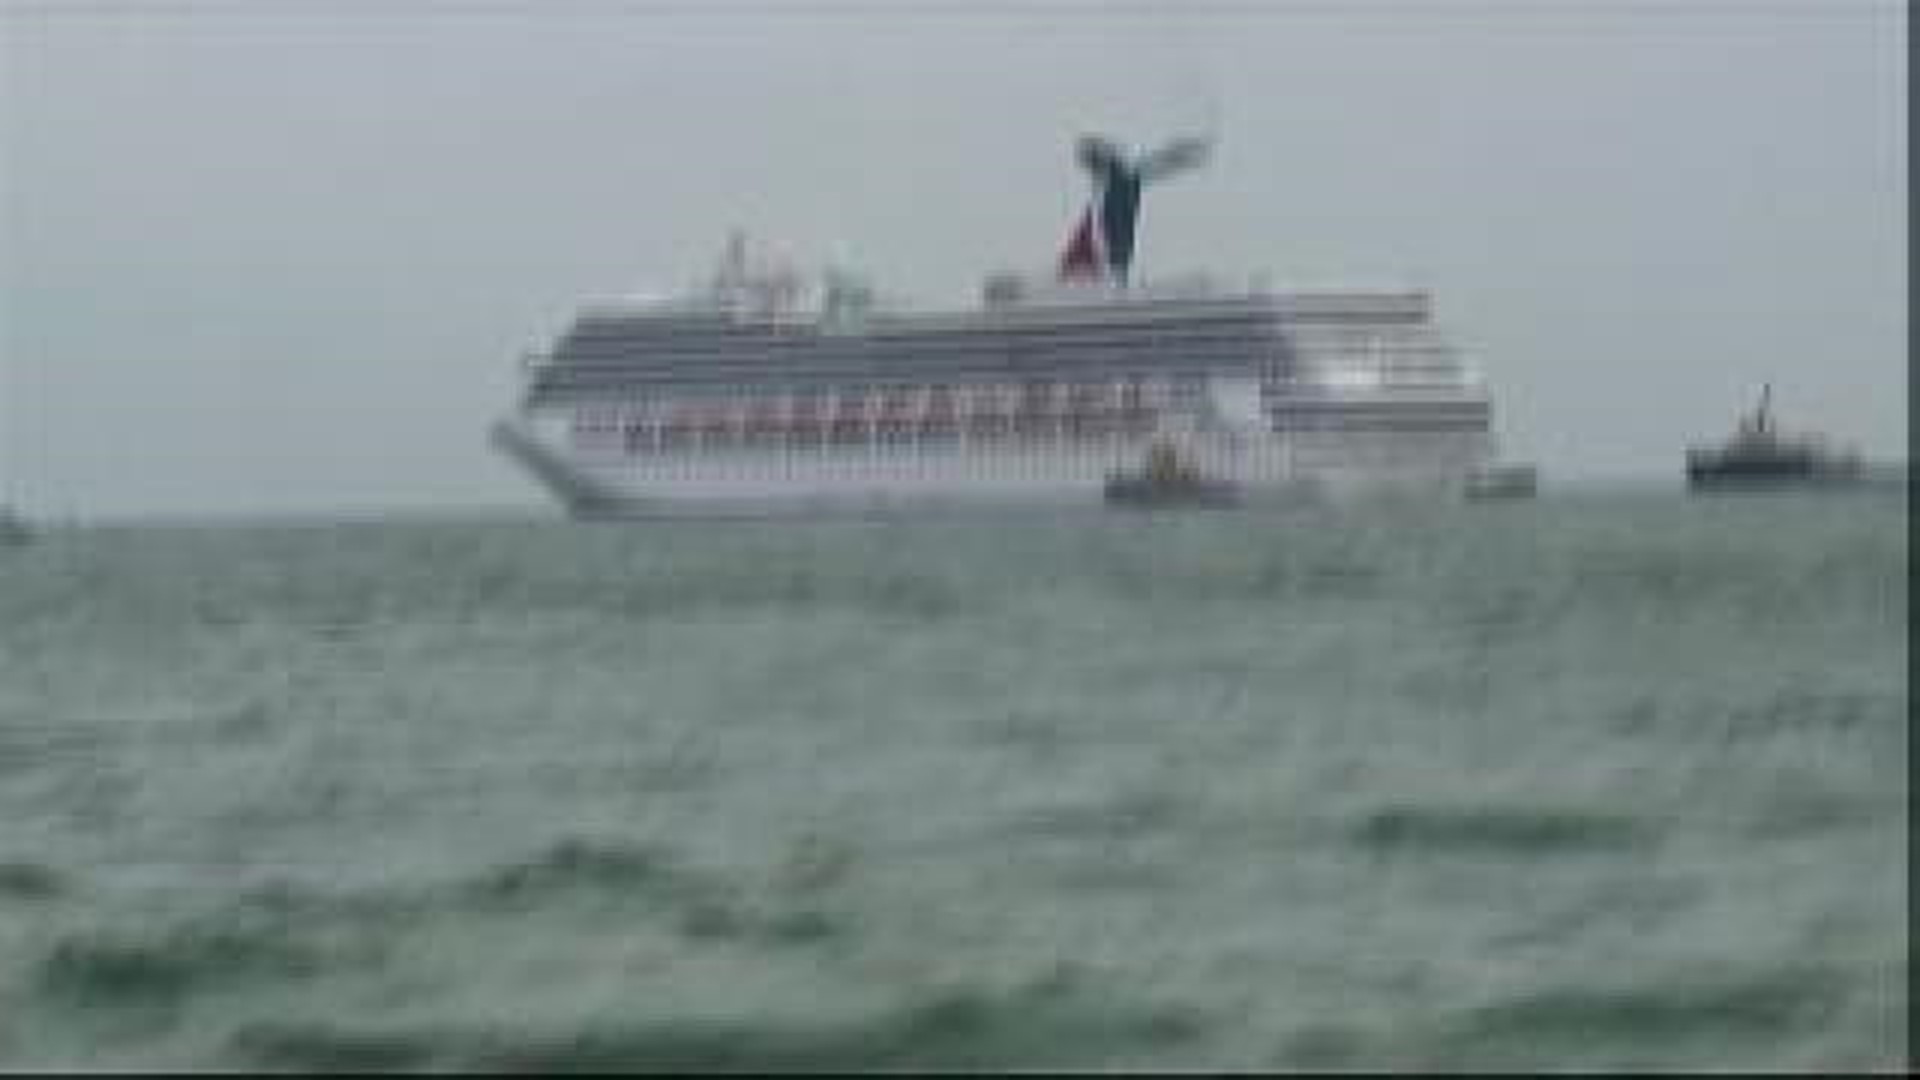 Stigler Woman Stranded on Cruise Ship